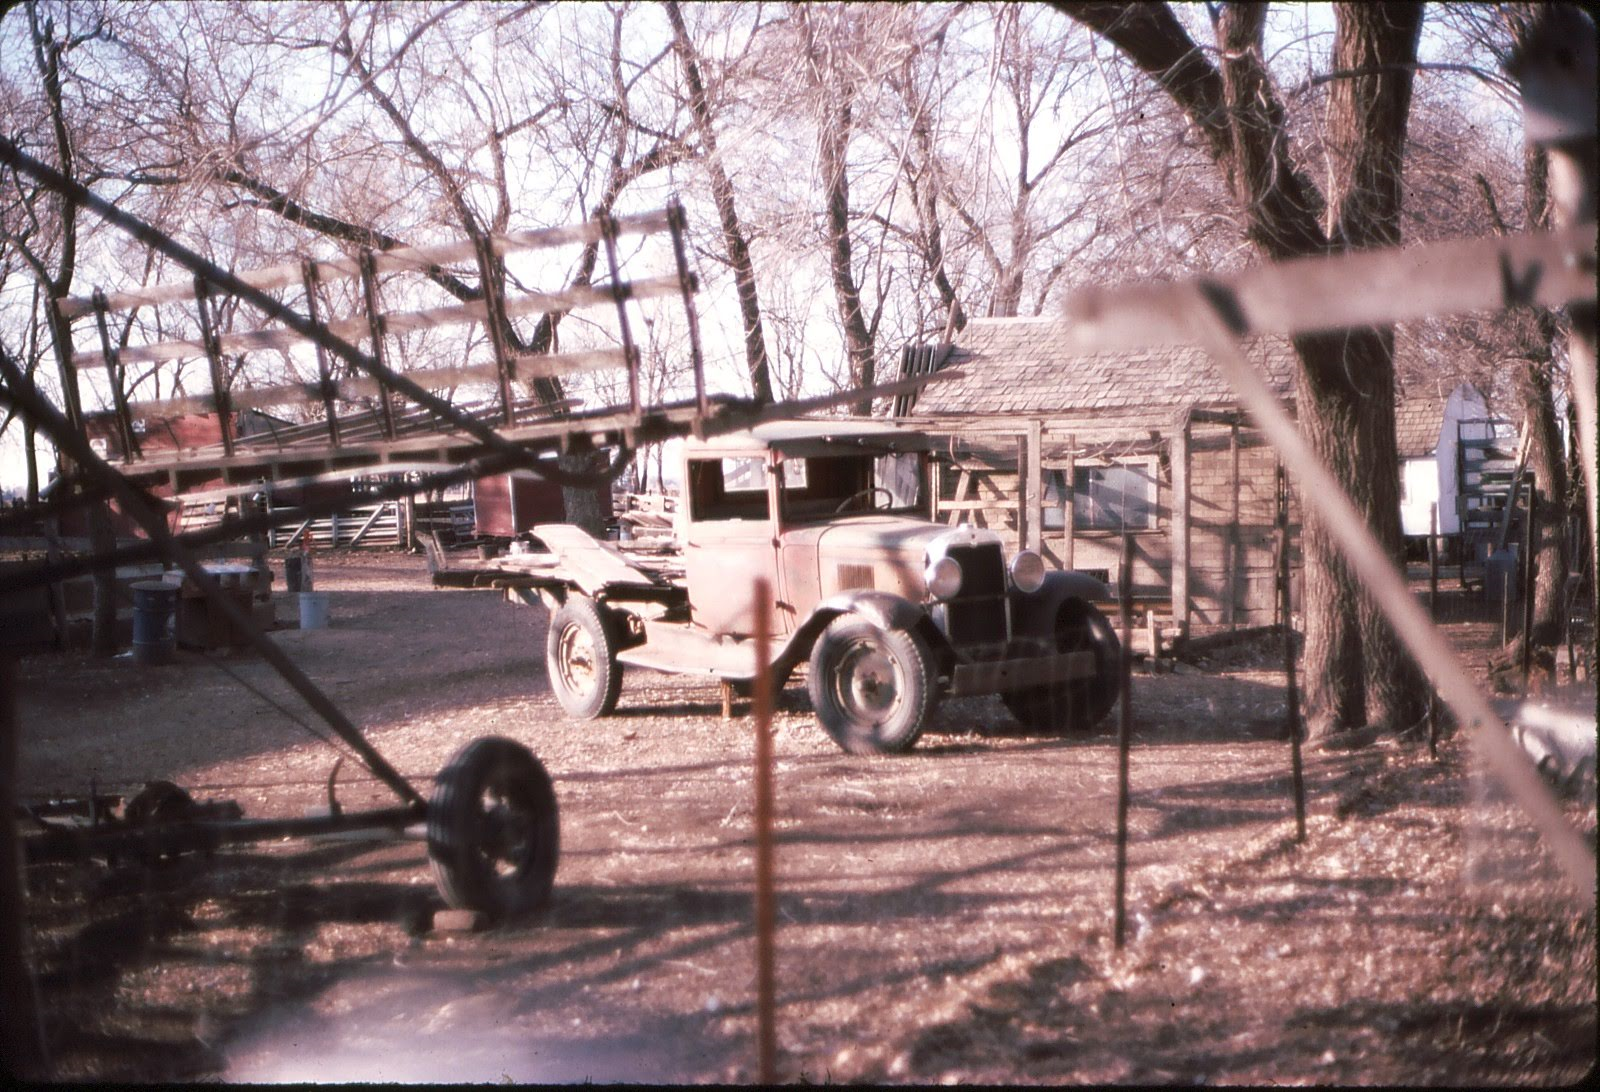 A truck parked on a homestead near farm equipment